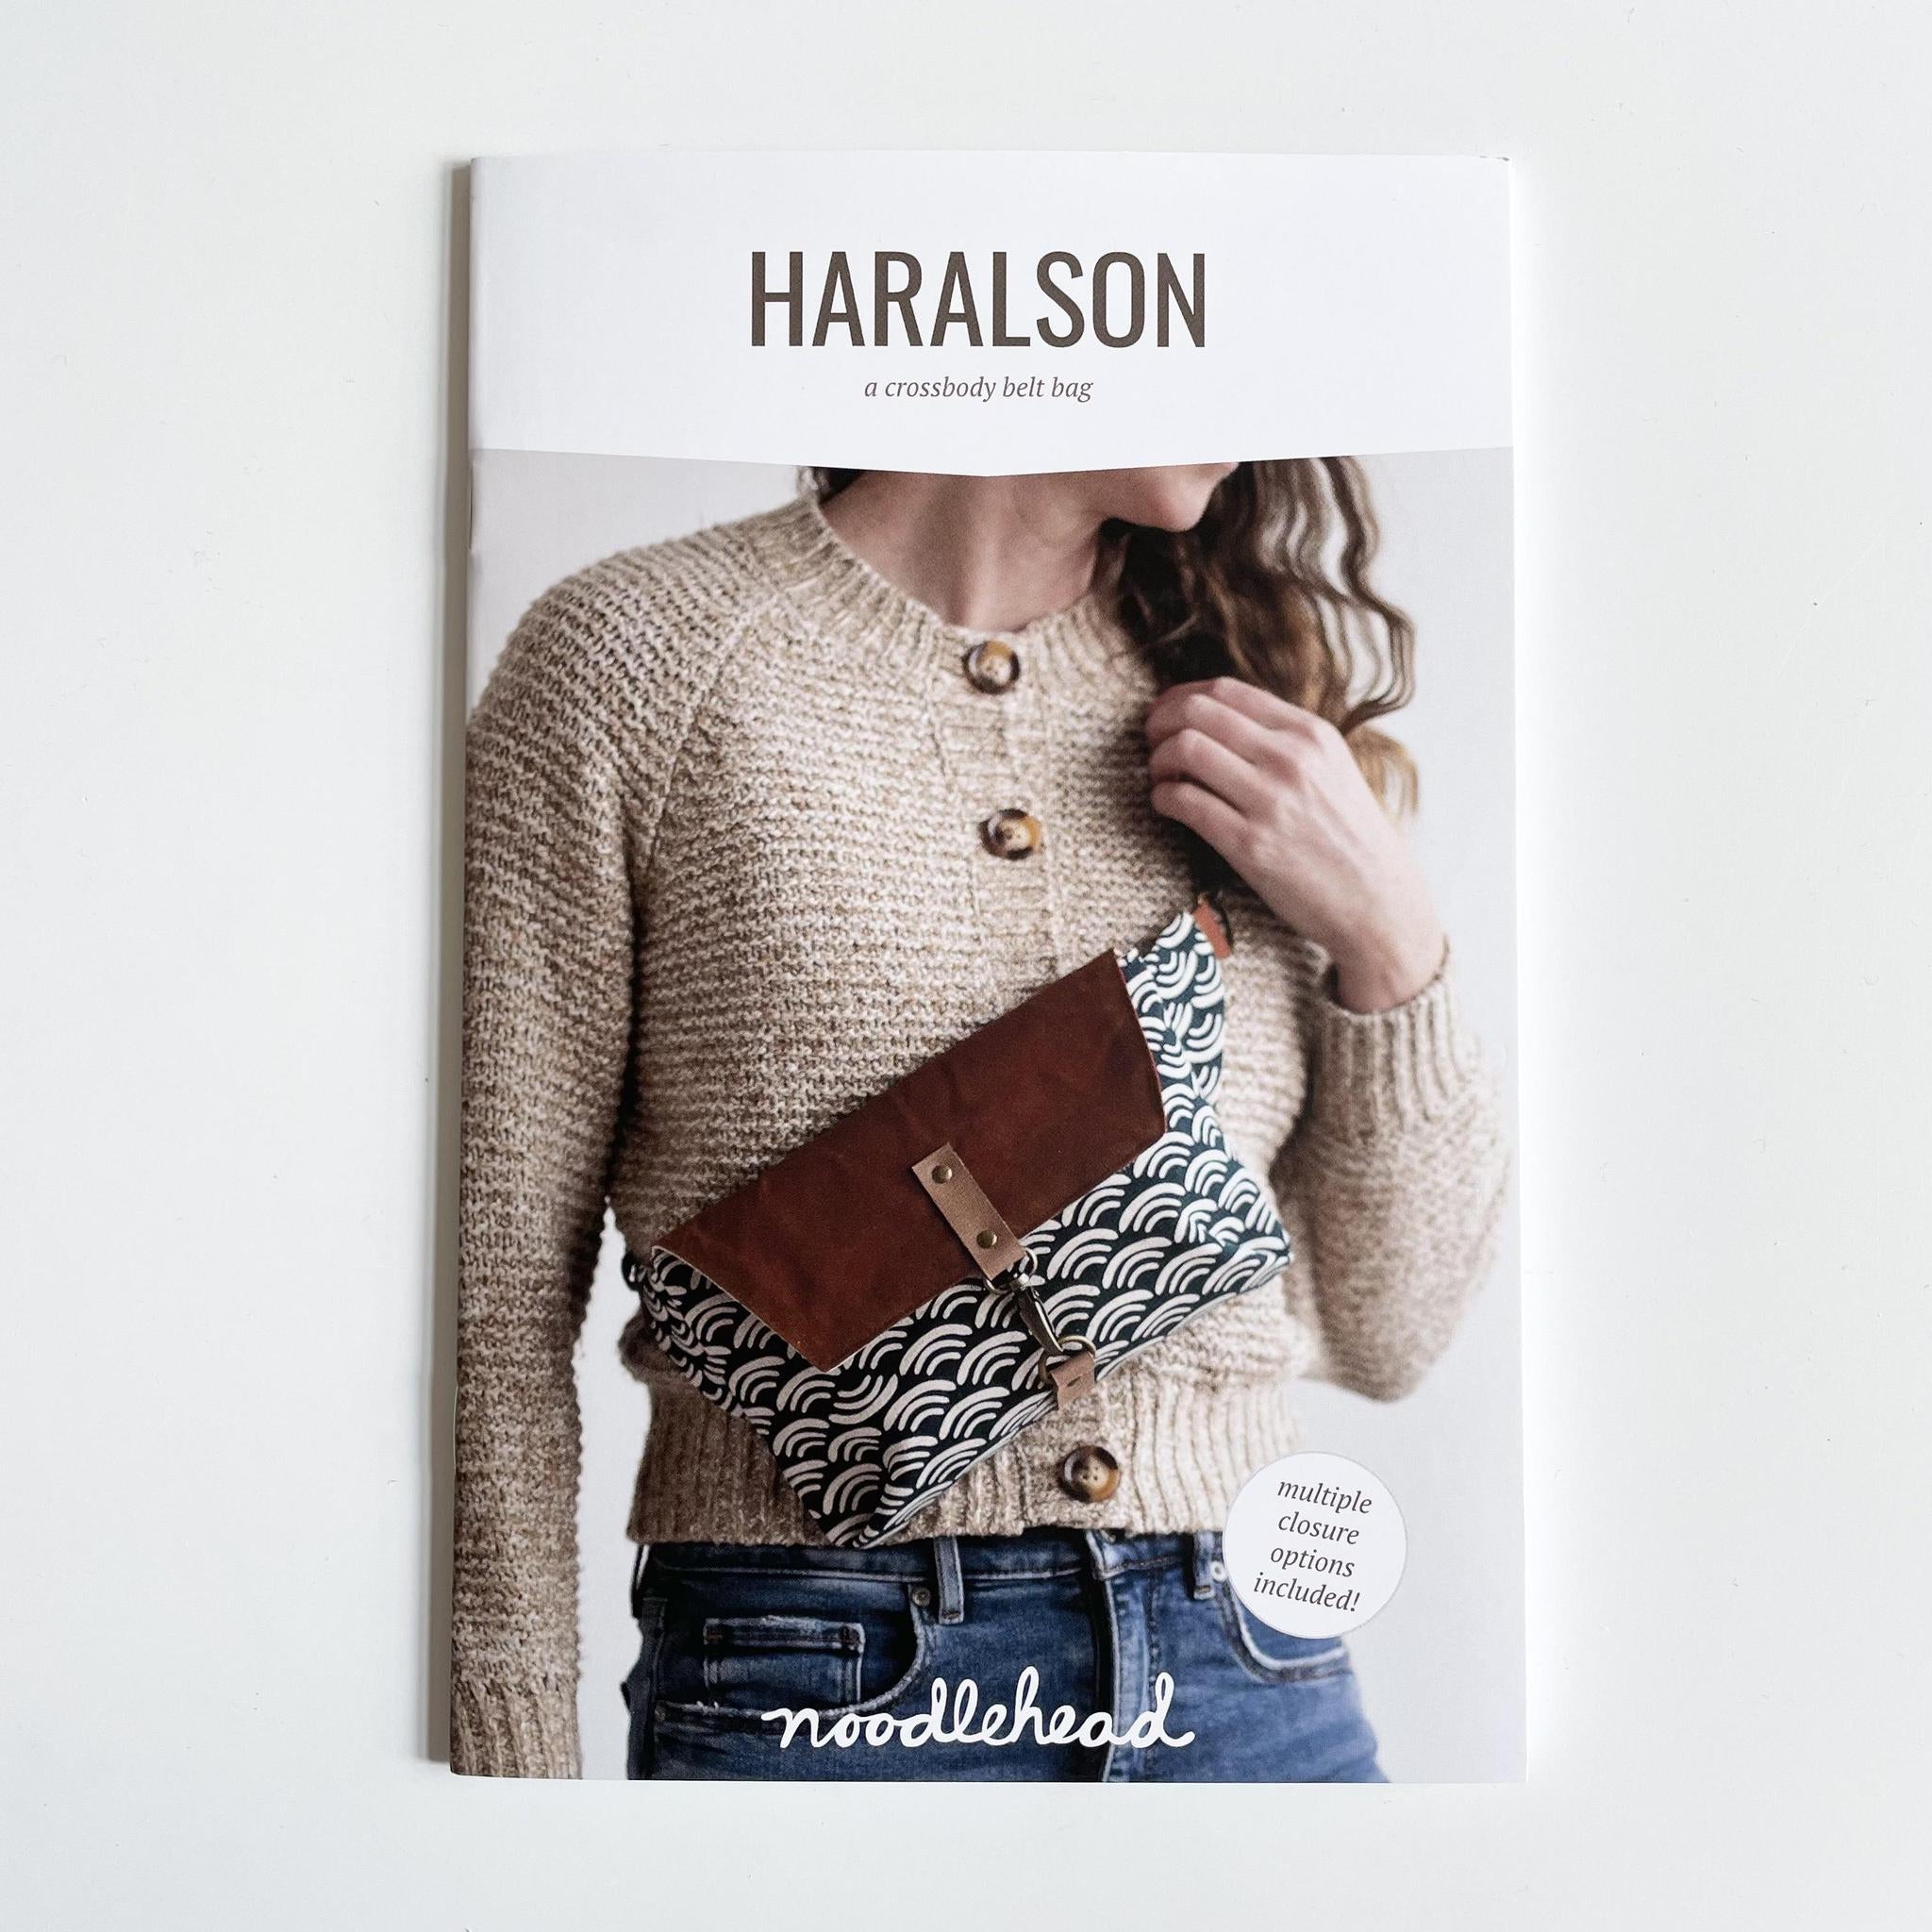 Noodlehead : Haralson Crossbody Belt Bag